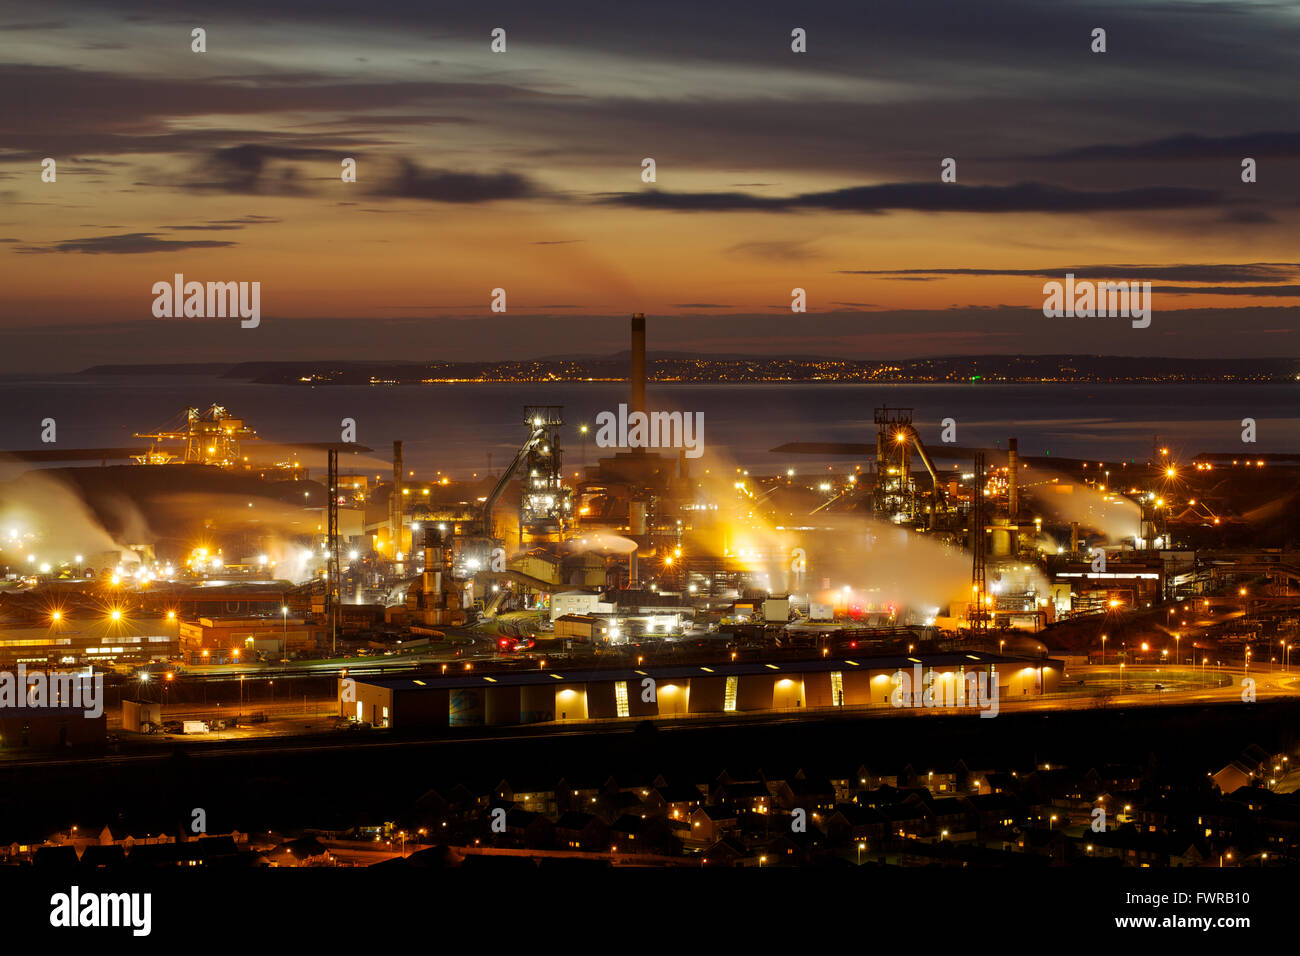 Tata Steel works, Port Talbot, South Wales, UK. Night scene at Port Talbot steelworks, South Wales UK. Stock Photo